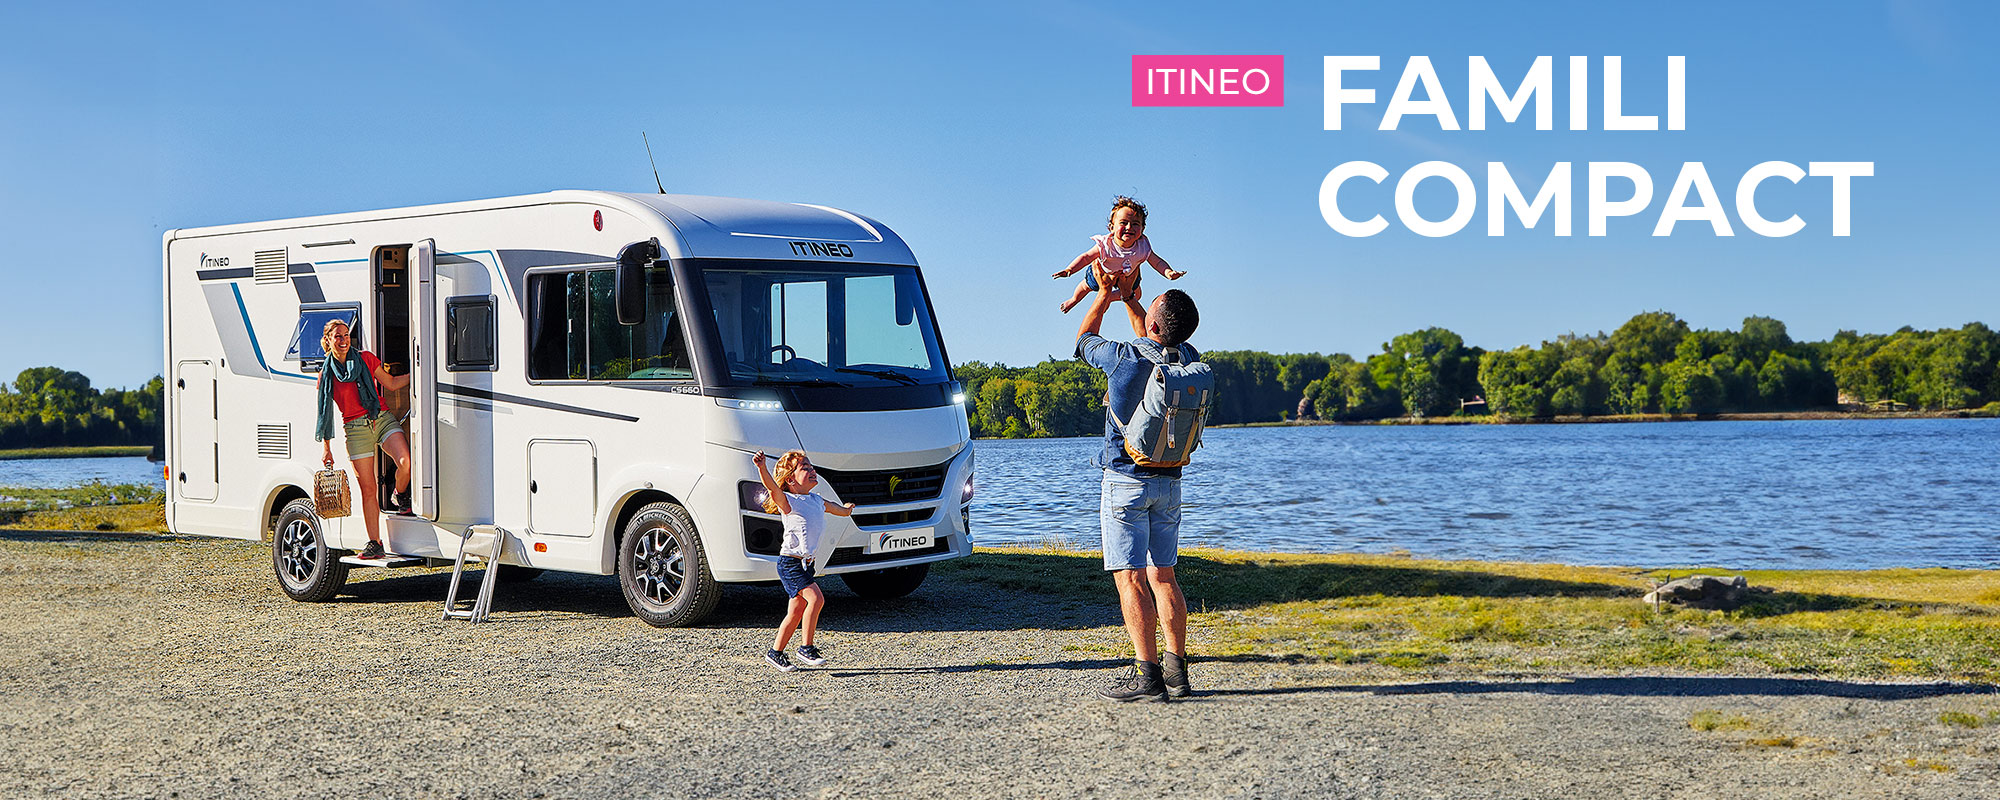 ITINEO FAMILI COMPACT